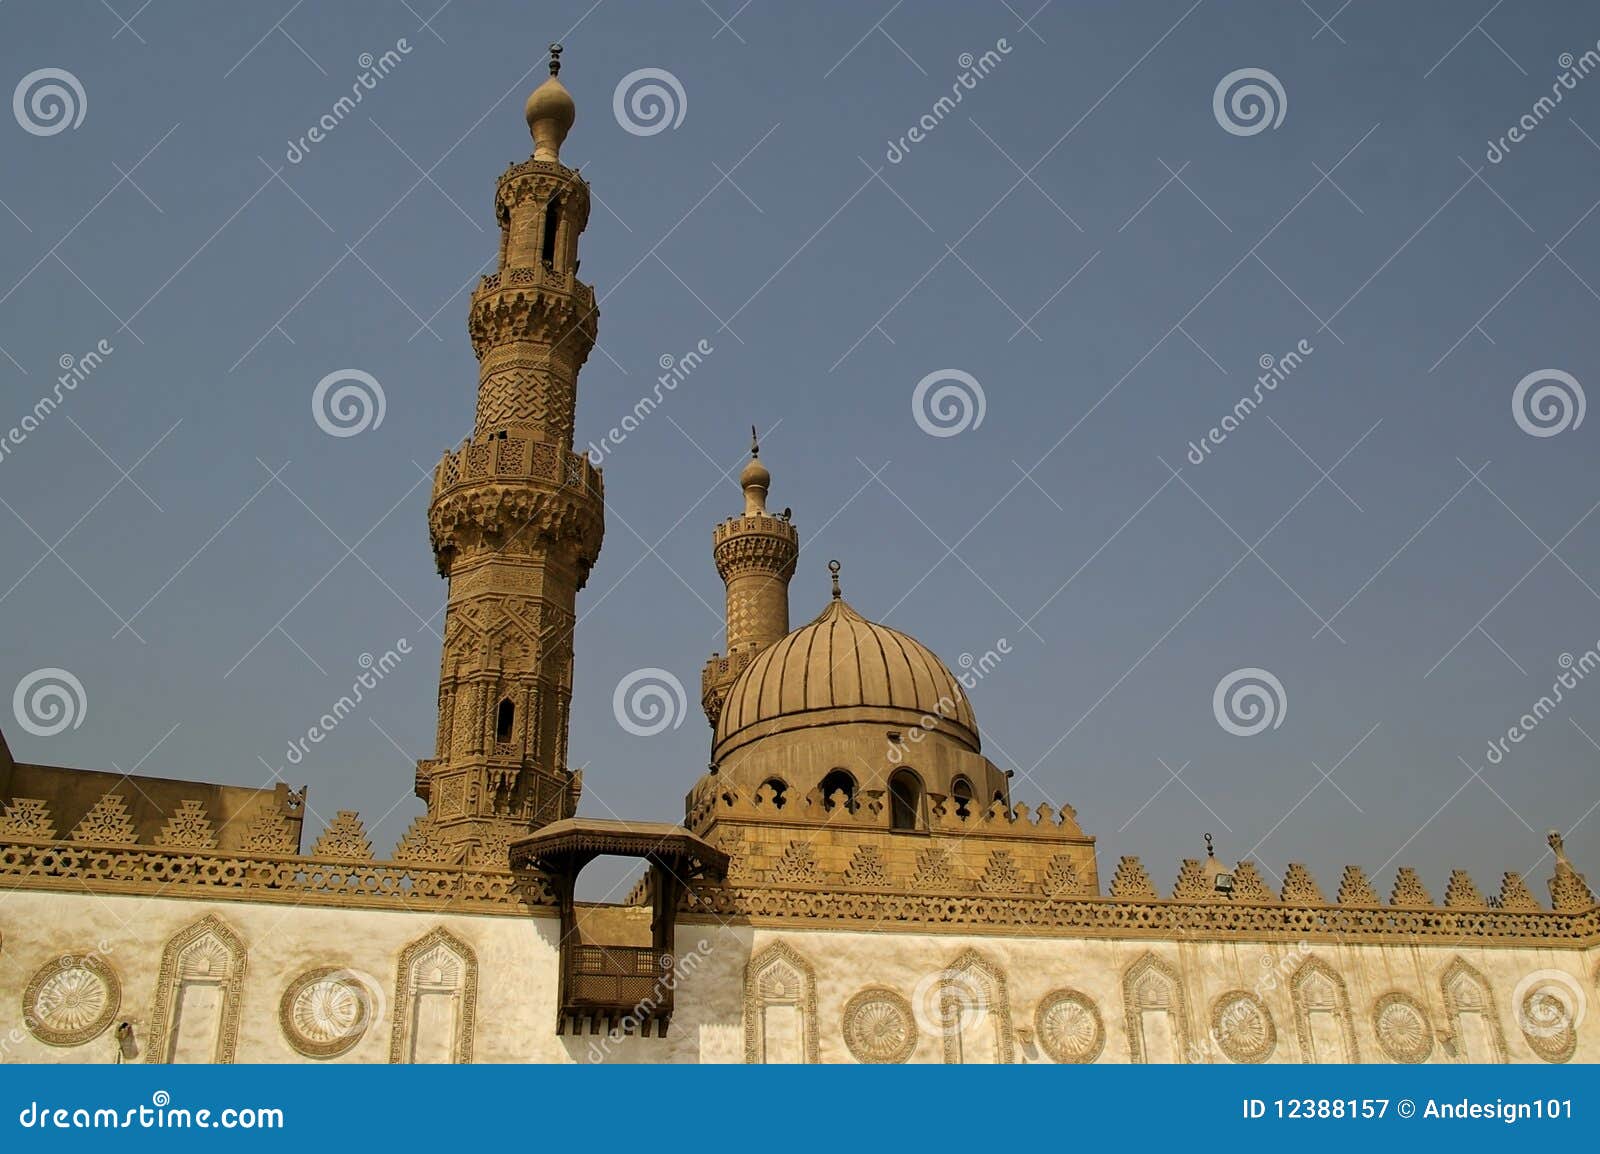 al azhar mosque in cairo